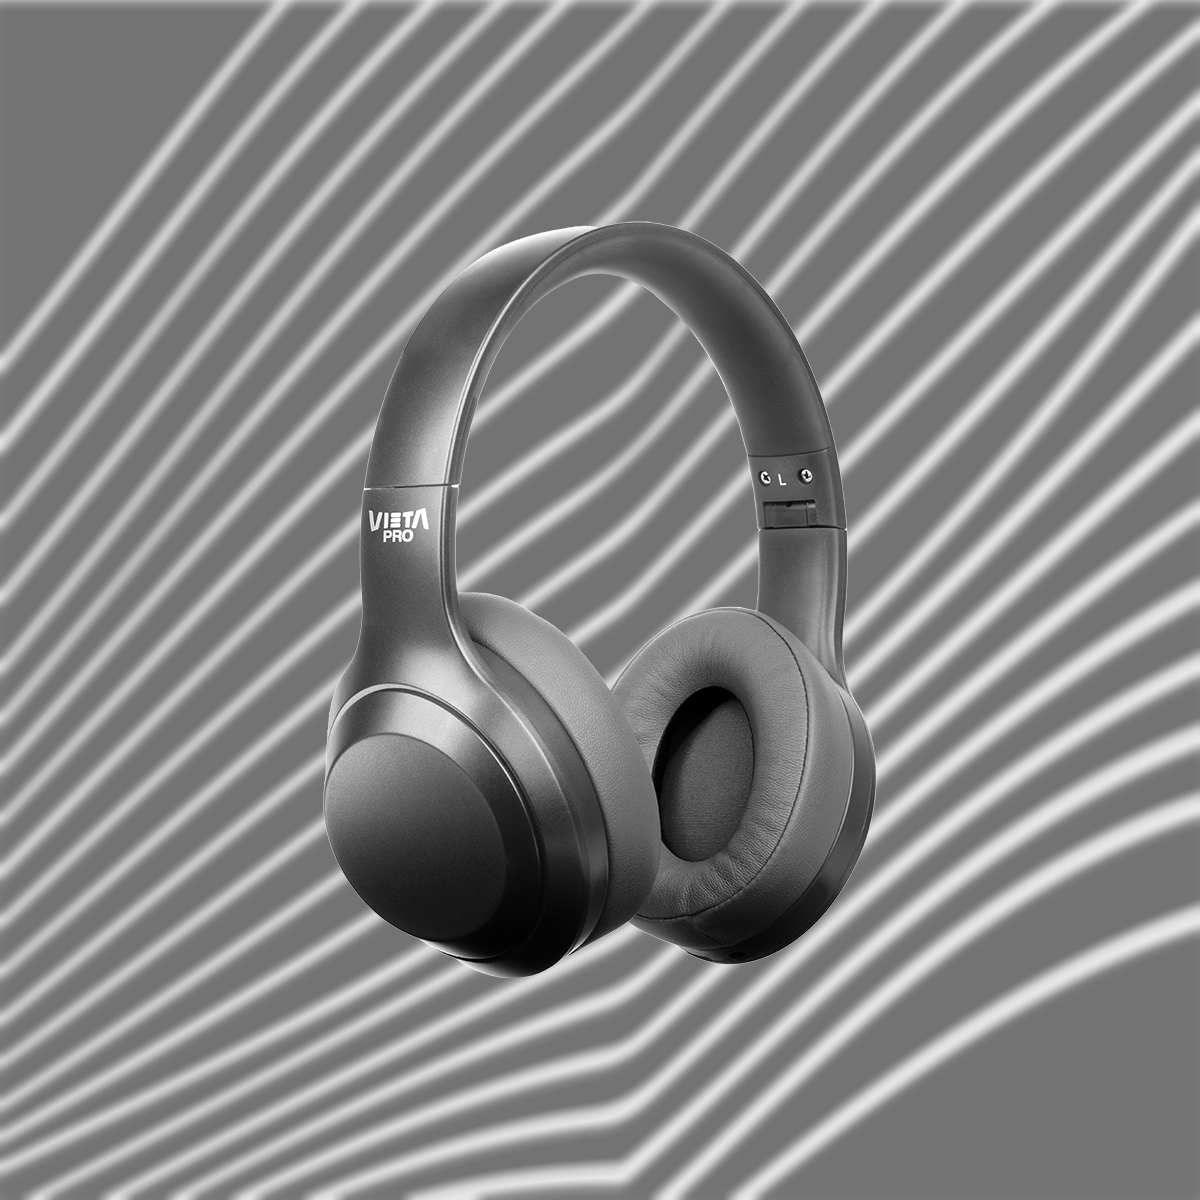 Auriculares de diadema Sony WH-CH720 Bluetooth y Noise Cancelling blancos